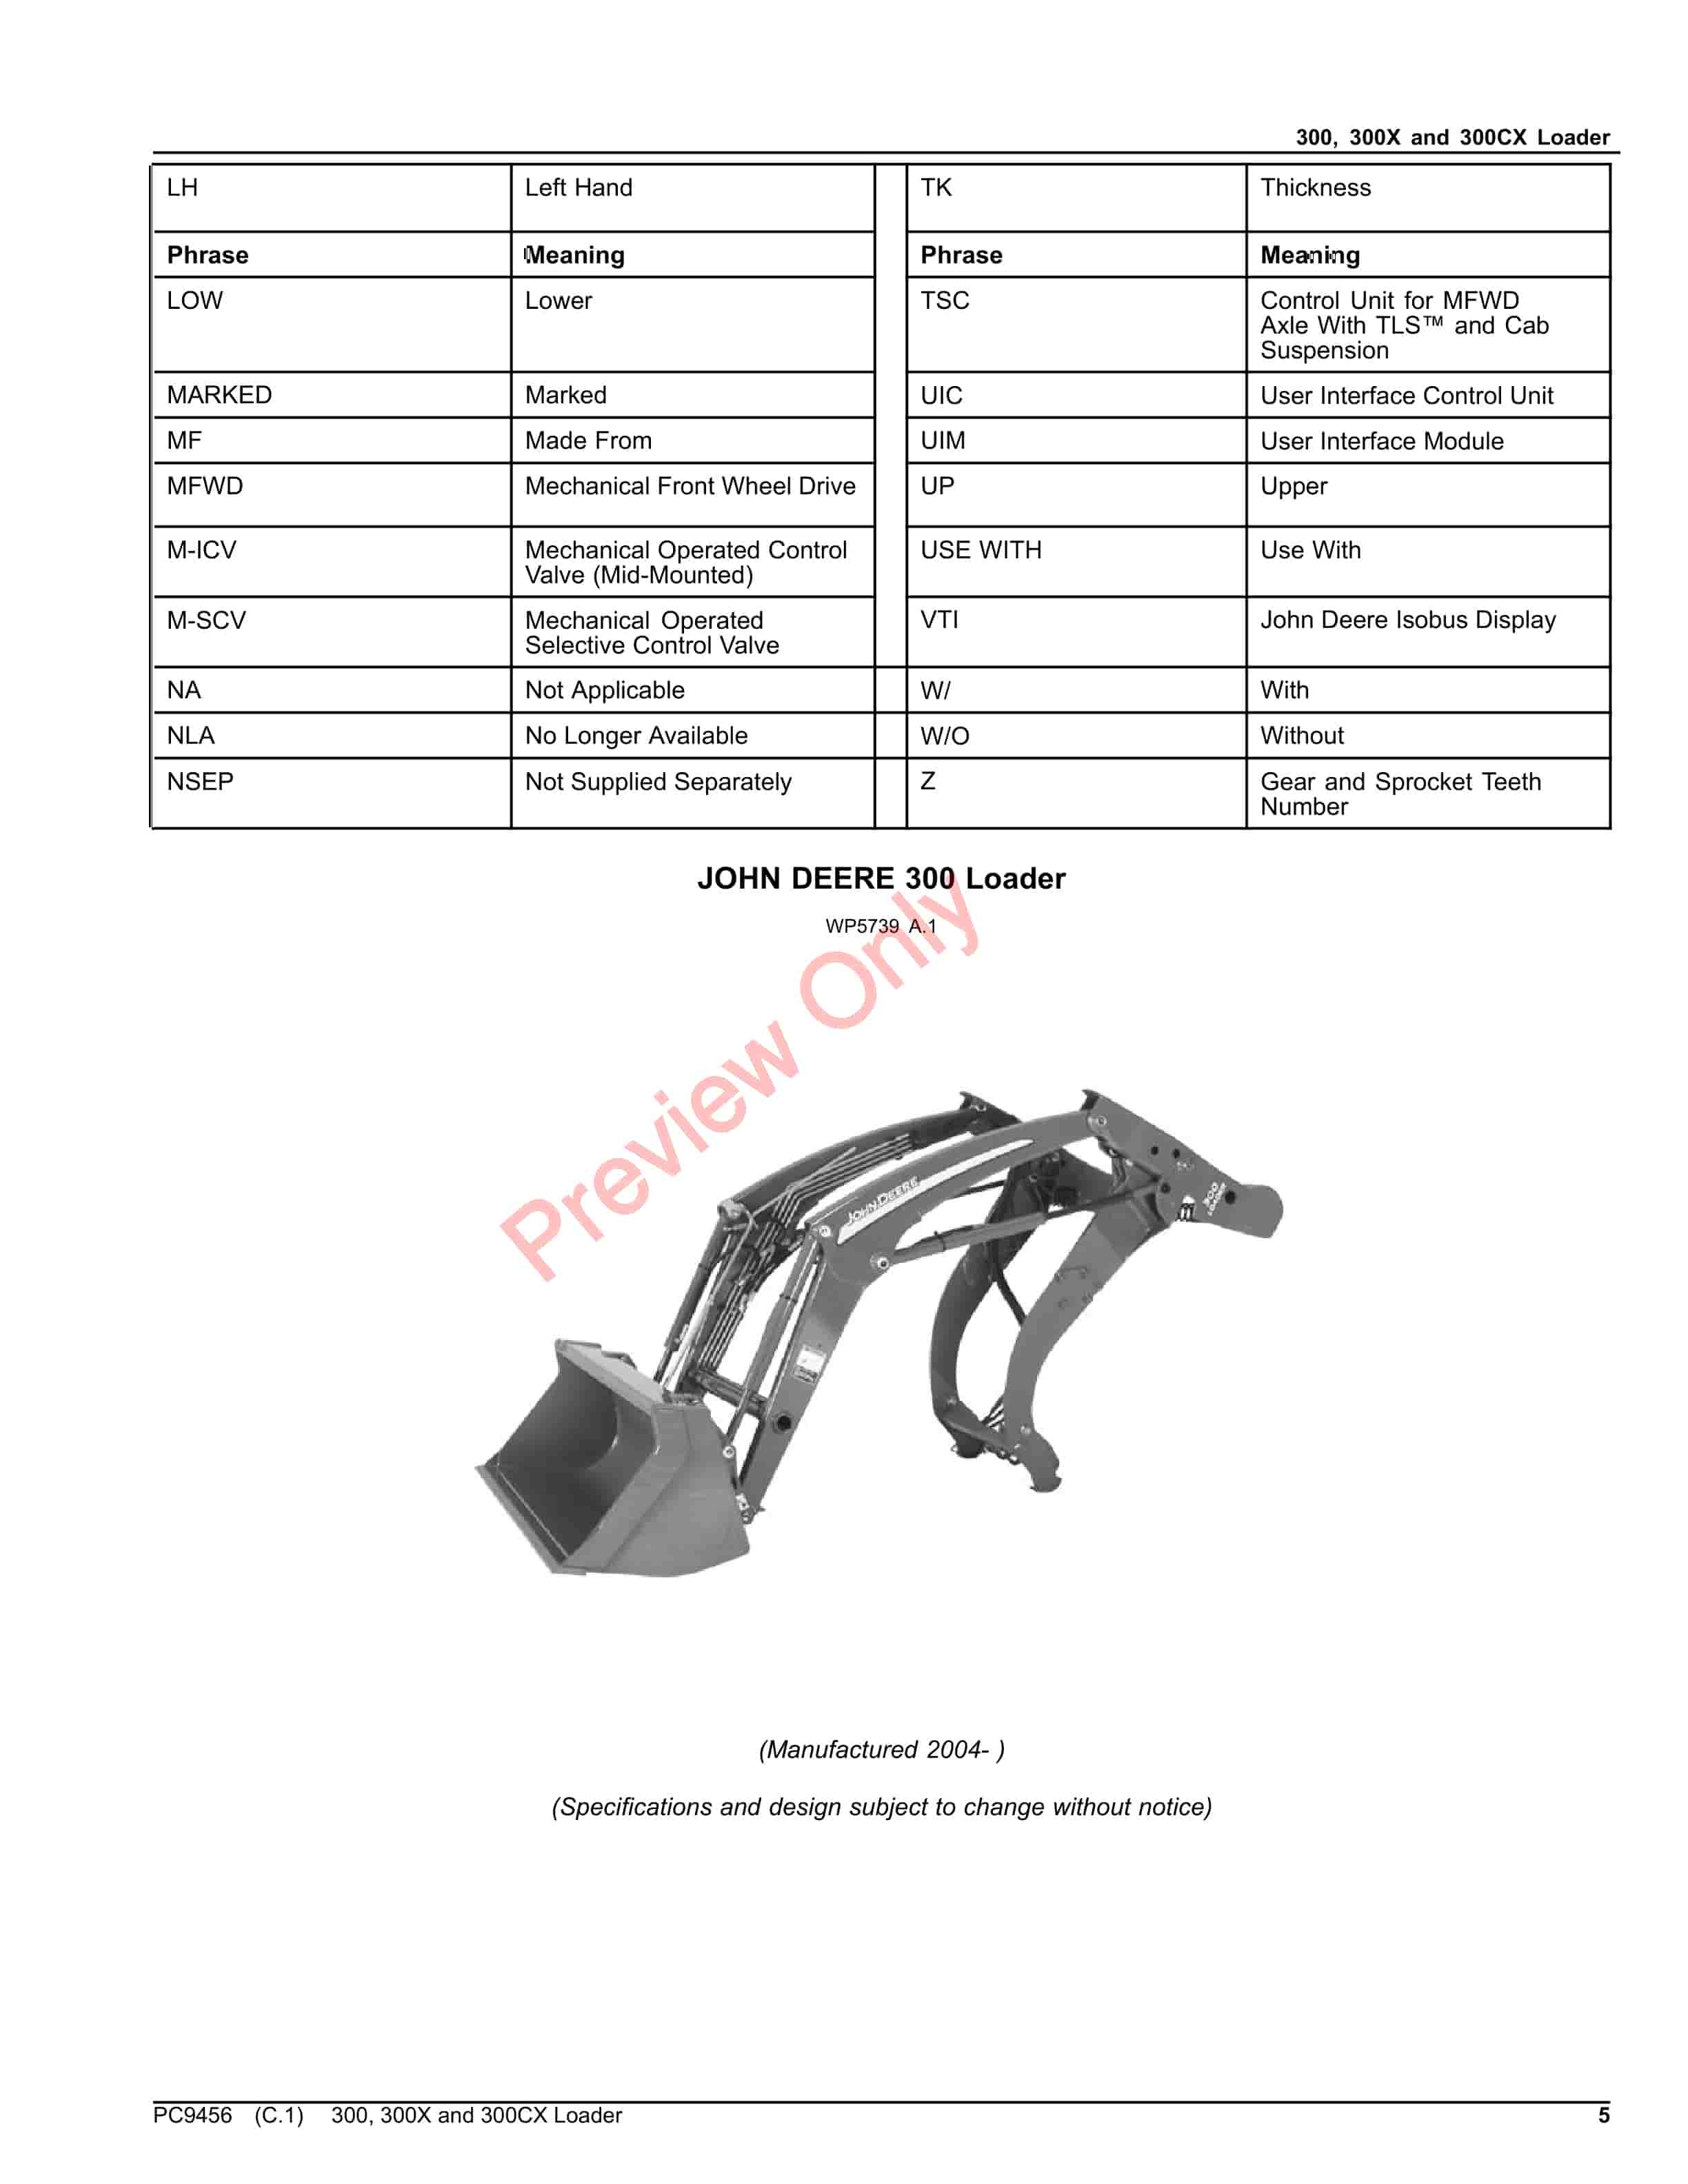 John Deere 300, 300X and 300CX Loader Parts Catalog PC9456 13OCT22-5